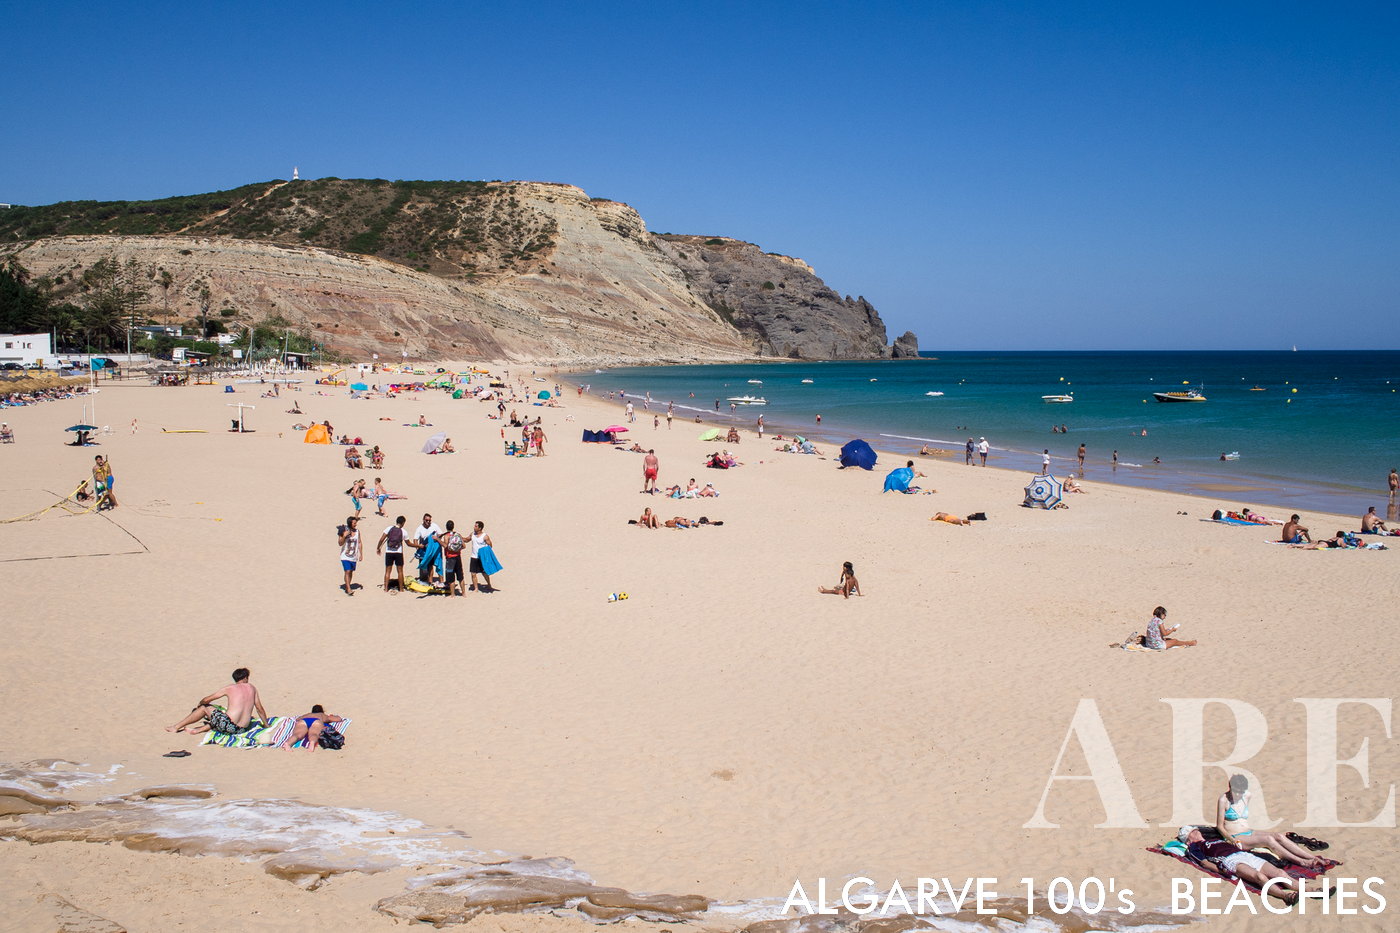 This photograph shows Praia da Luz in early summer